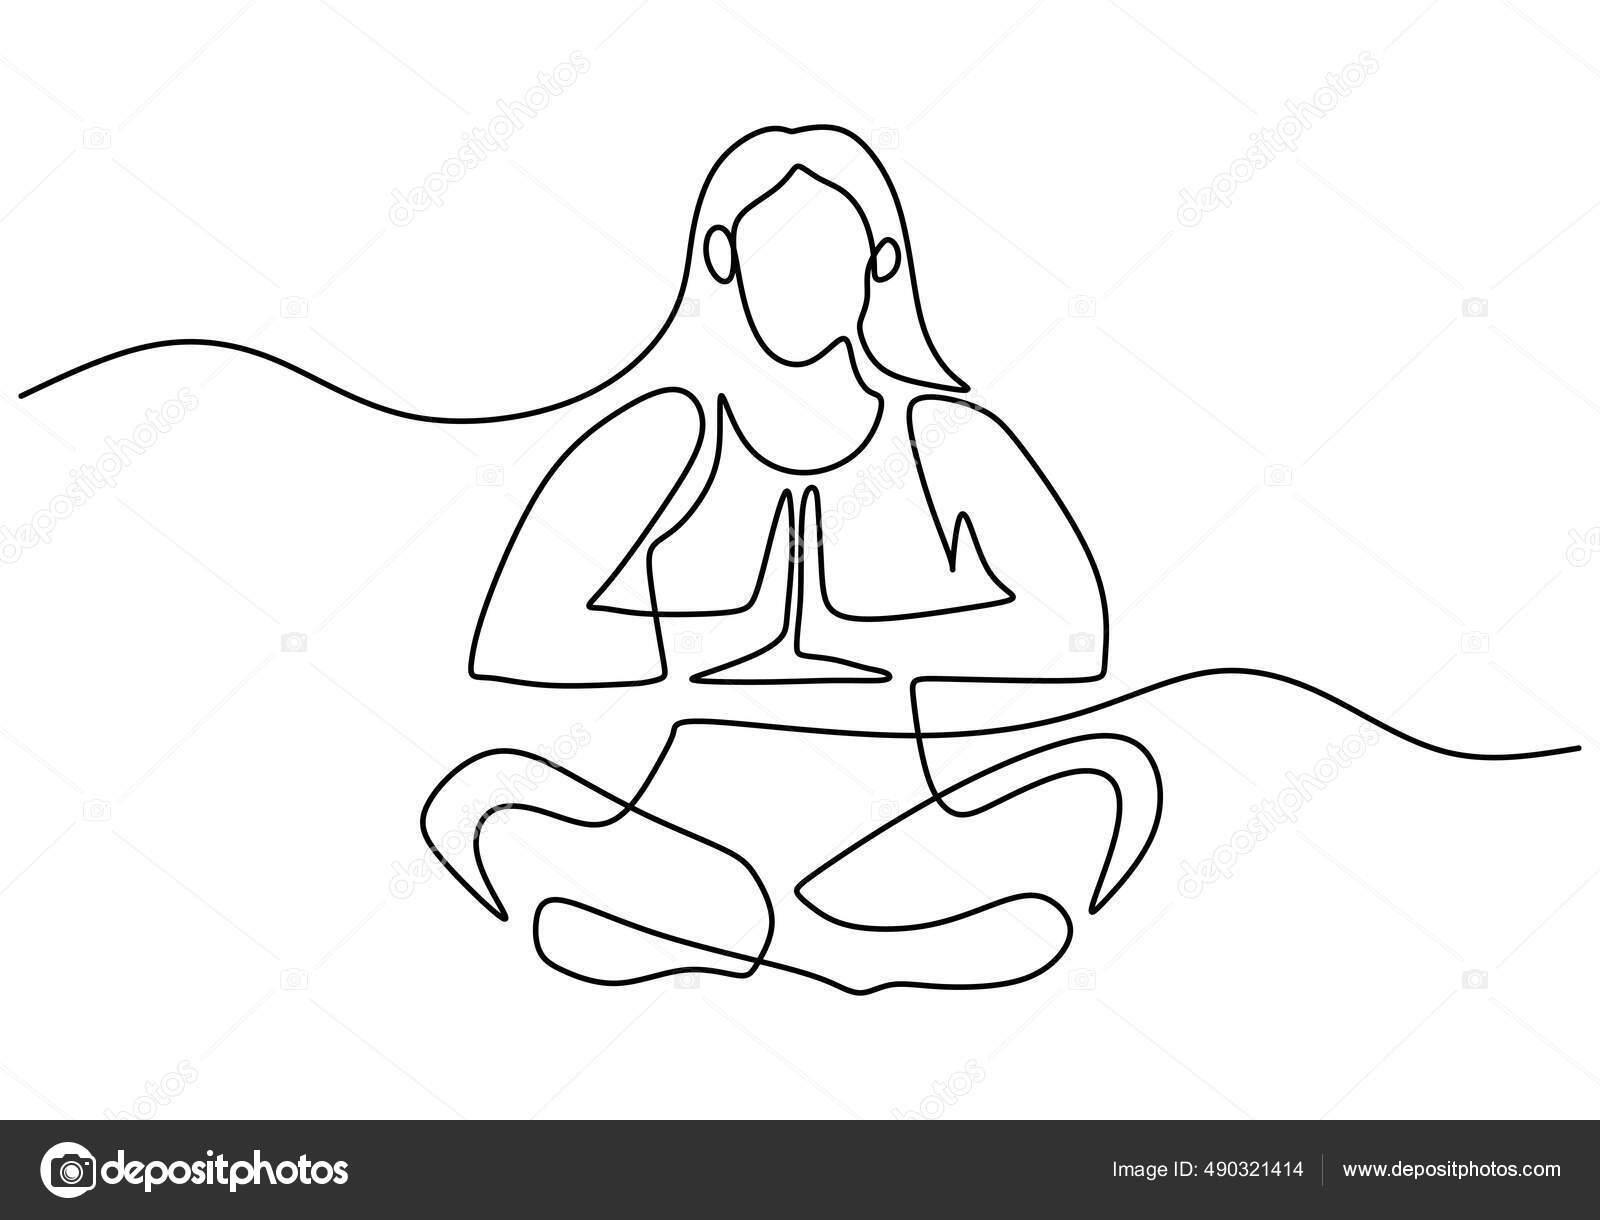 https://st2.depositphotos.com/17601448/49032/v/1600/depositphotos_490321414-stock-illustration-woman-doing-yoga-exercise-continuous.jpg